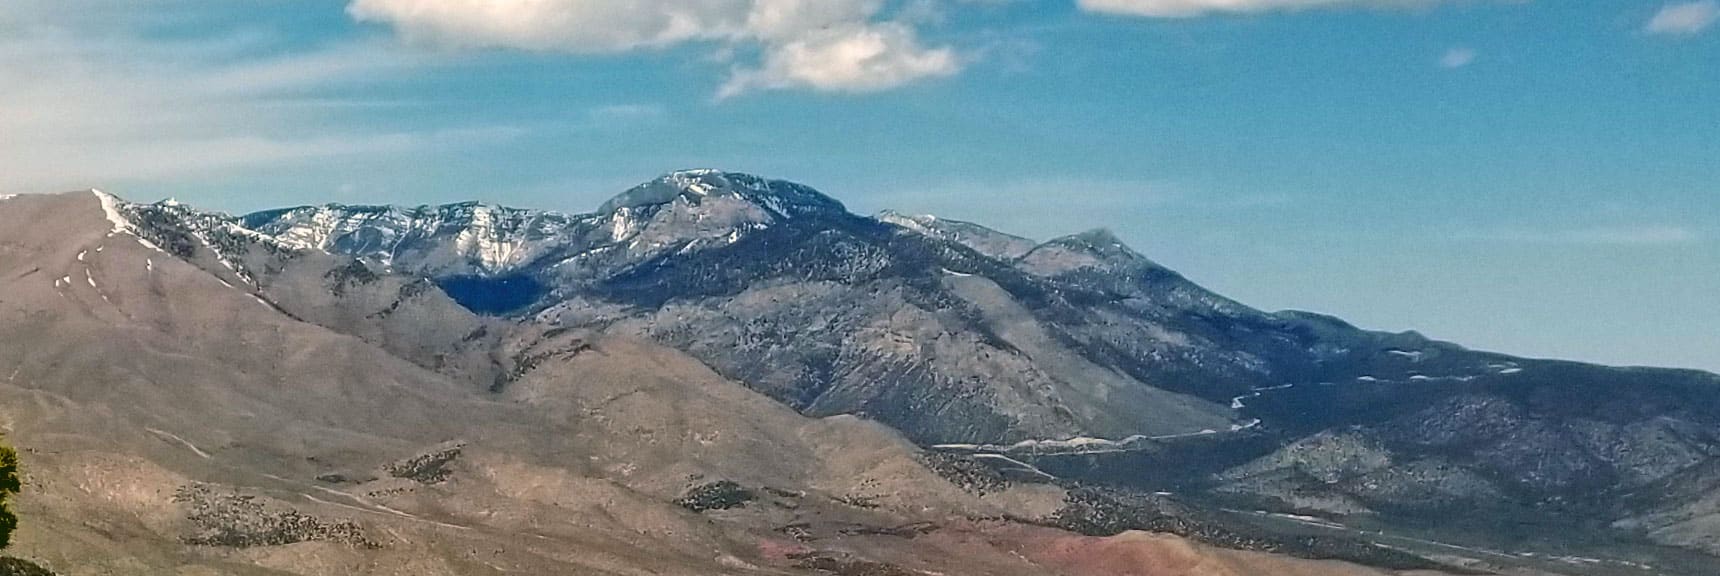 Fletcher Peak (center) Viewed from La Madre Mountain: Mummy Mt. in Background.